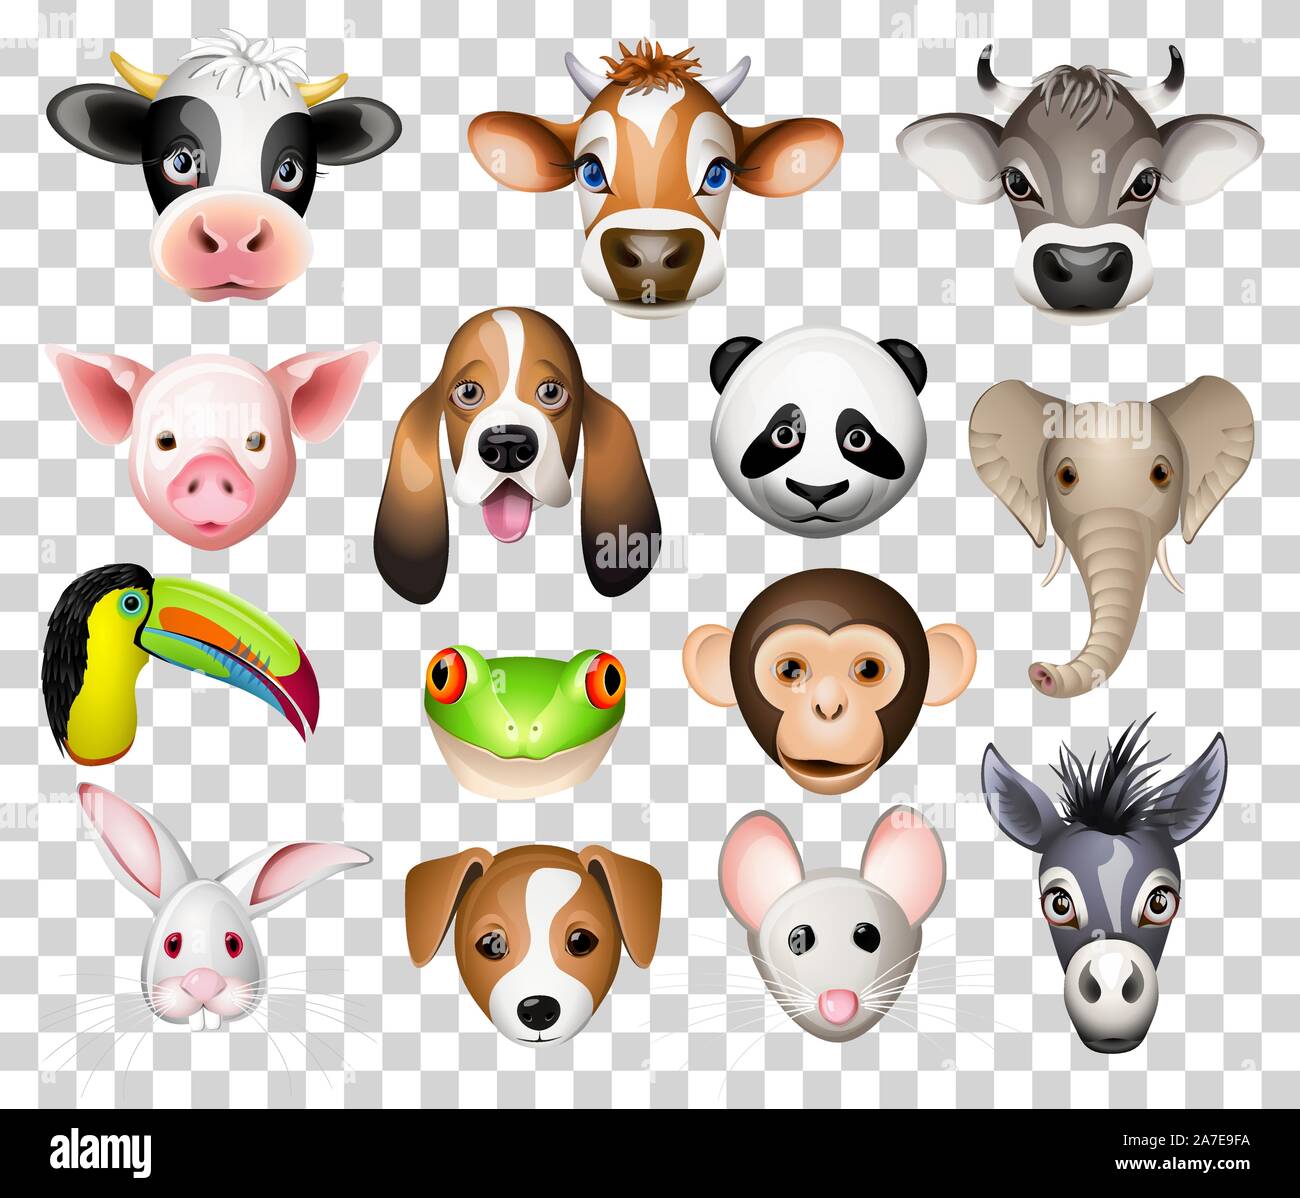 Dog cartoon animals hi-res stock photography and images - Alamy